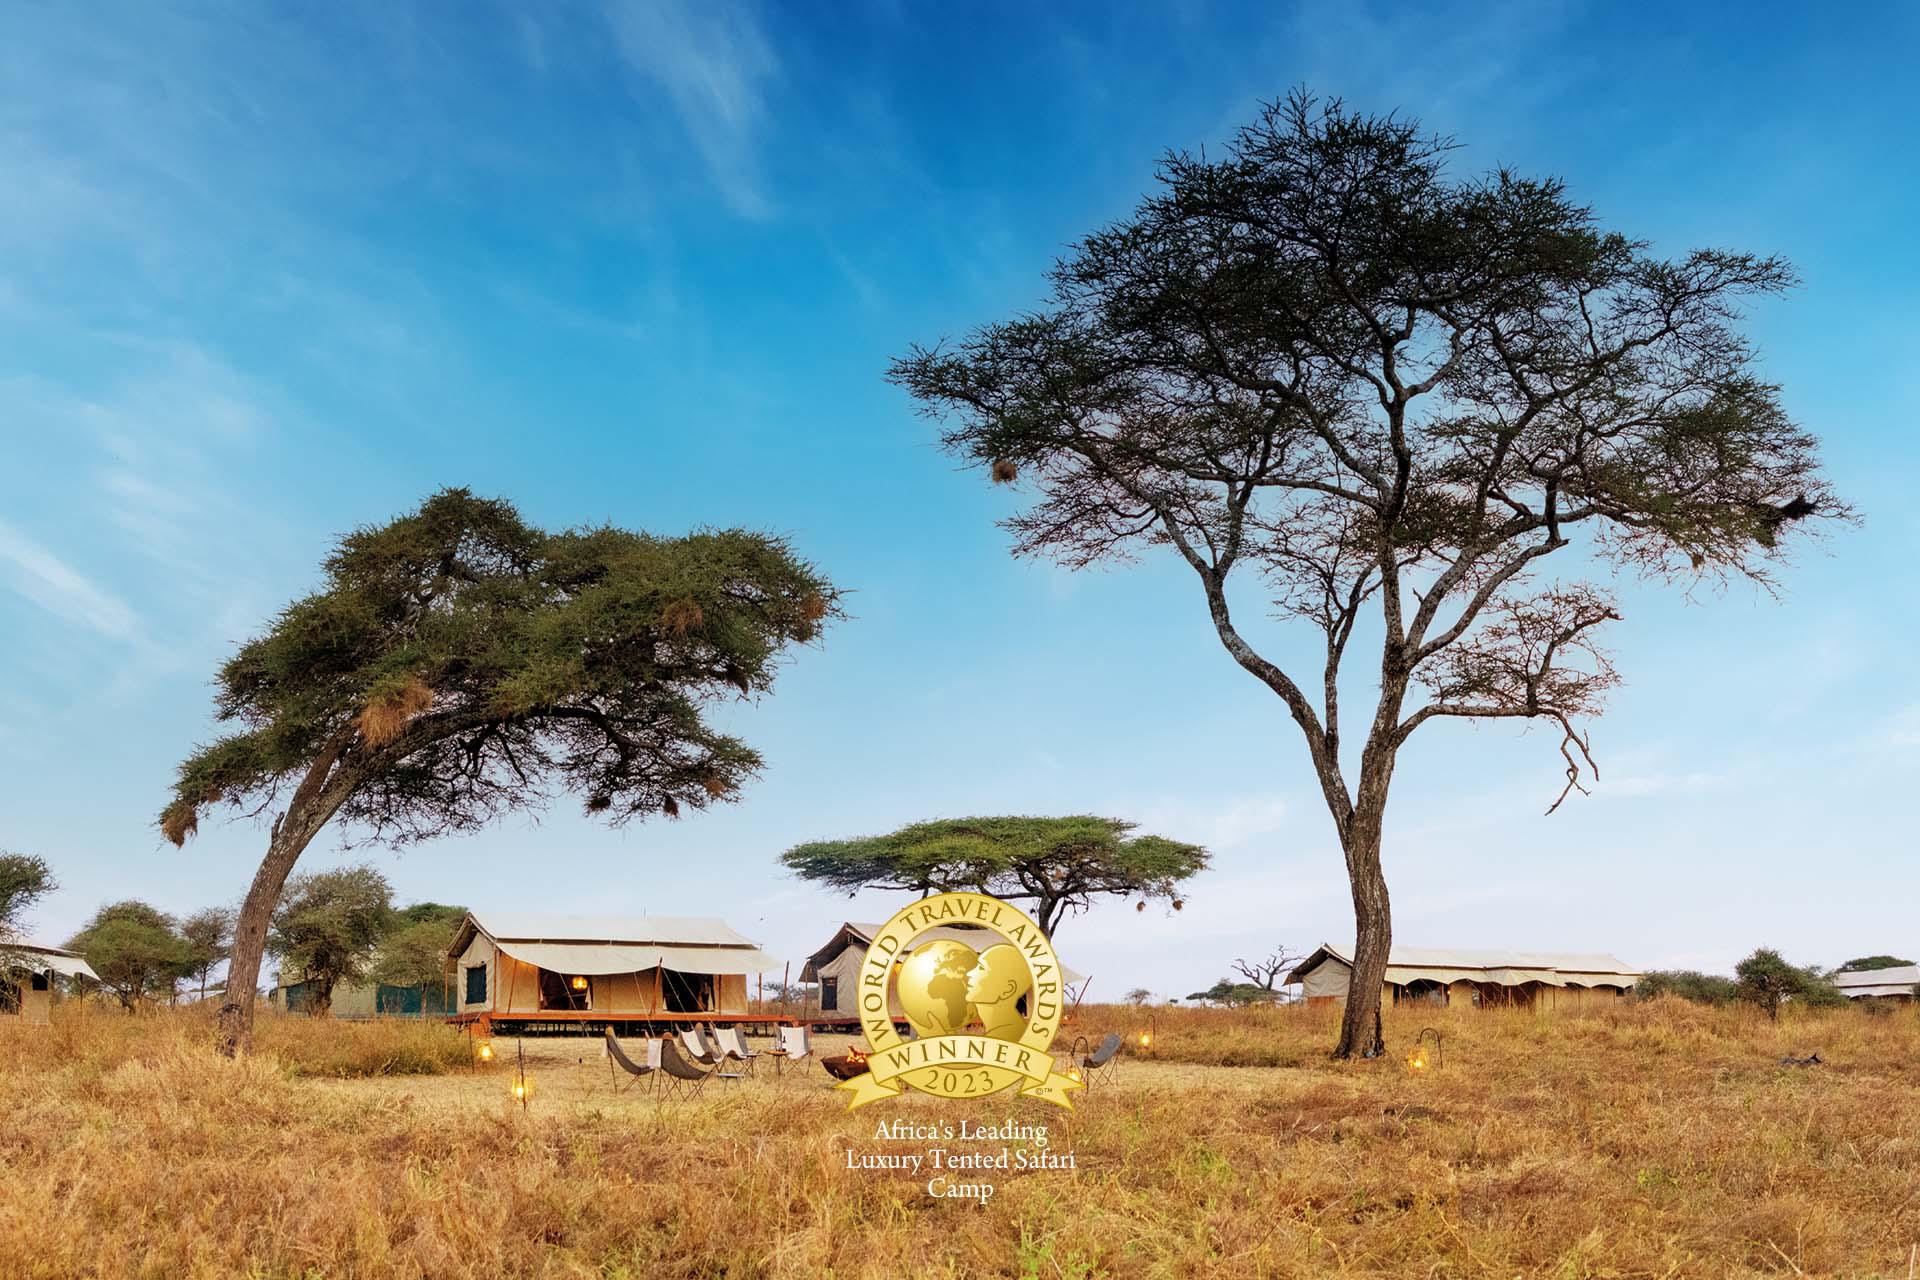 Siringit Serengeti Camp has been voted Africa's Leading Luxury Tented Safari Camp 2023 on the World Travel Awards!